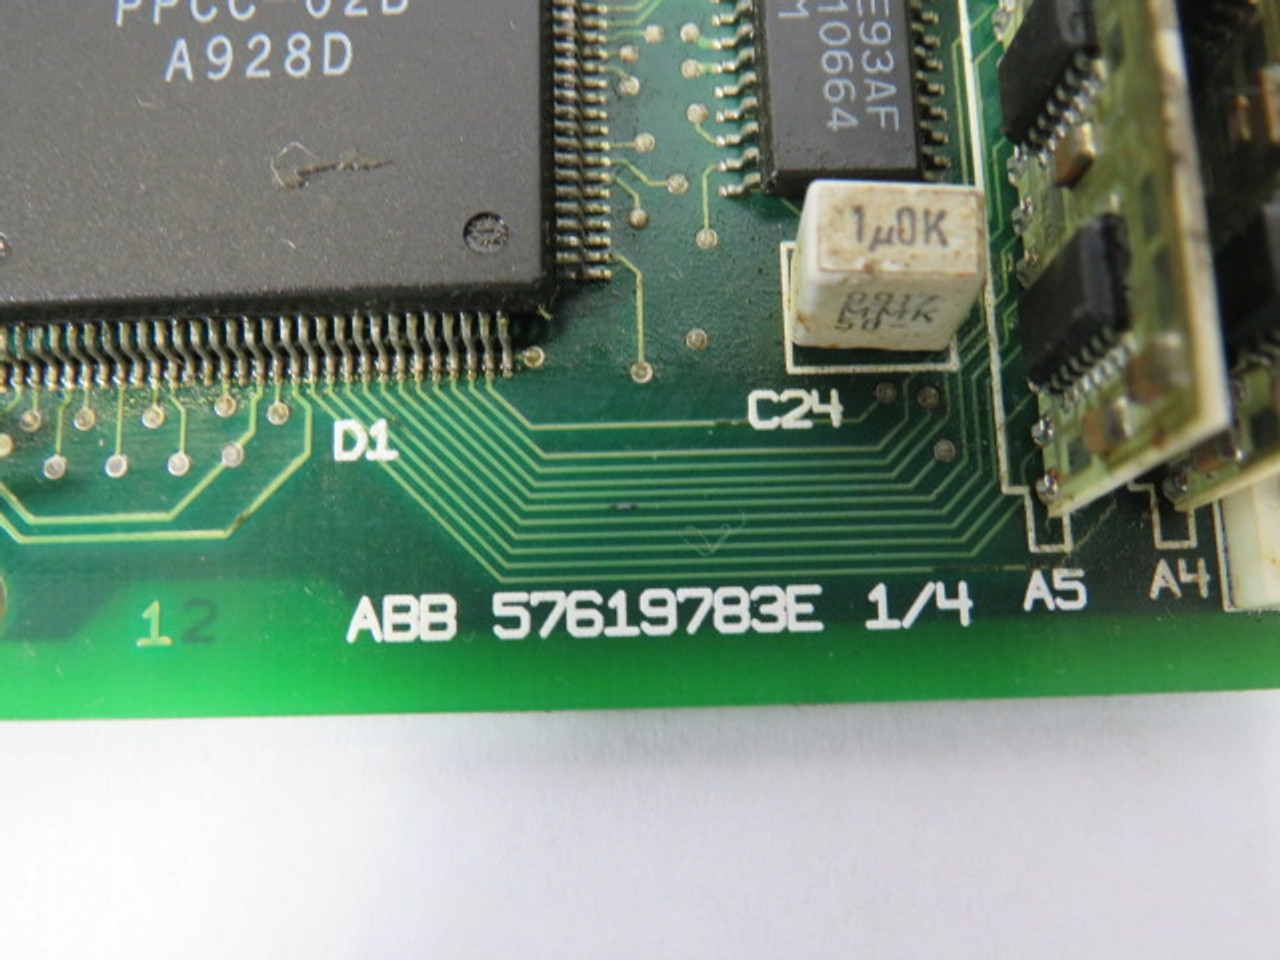 ABB 57619783E NINT-46 Main Circuit Interface Board USED